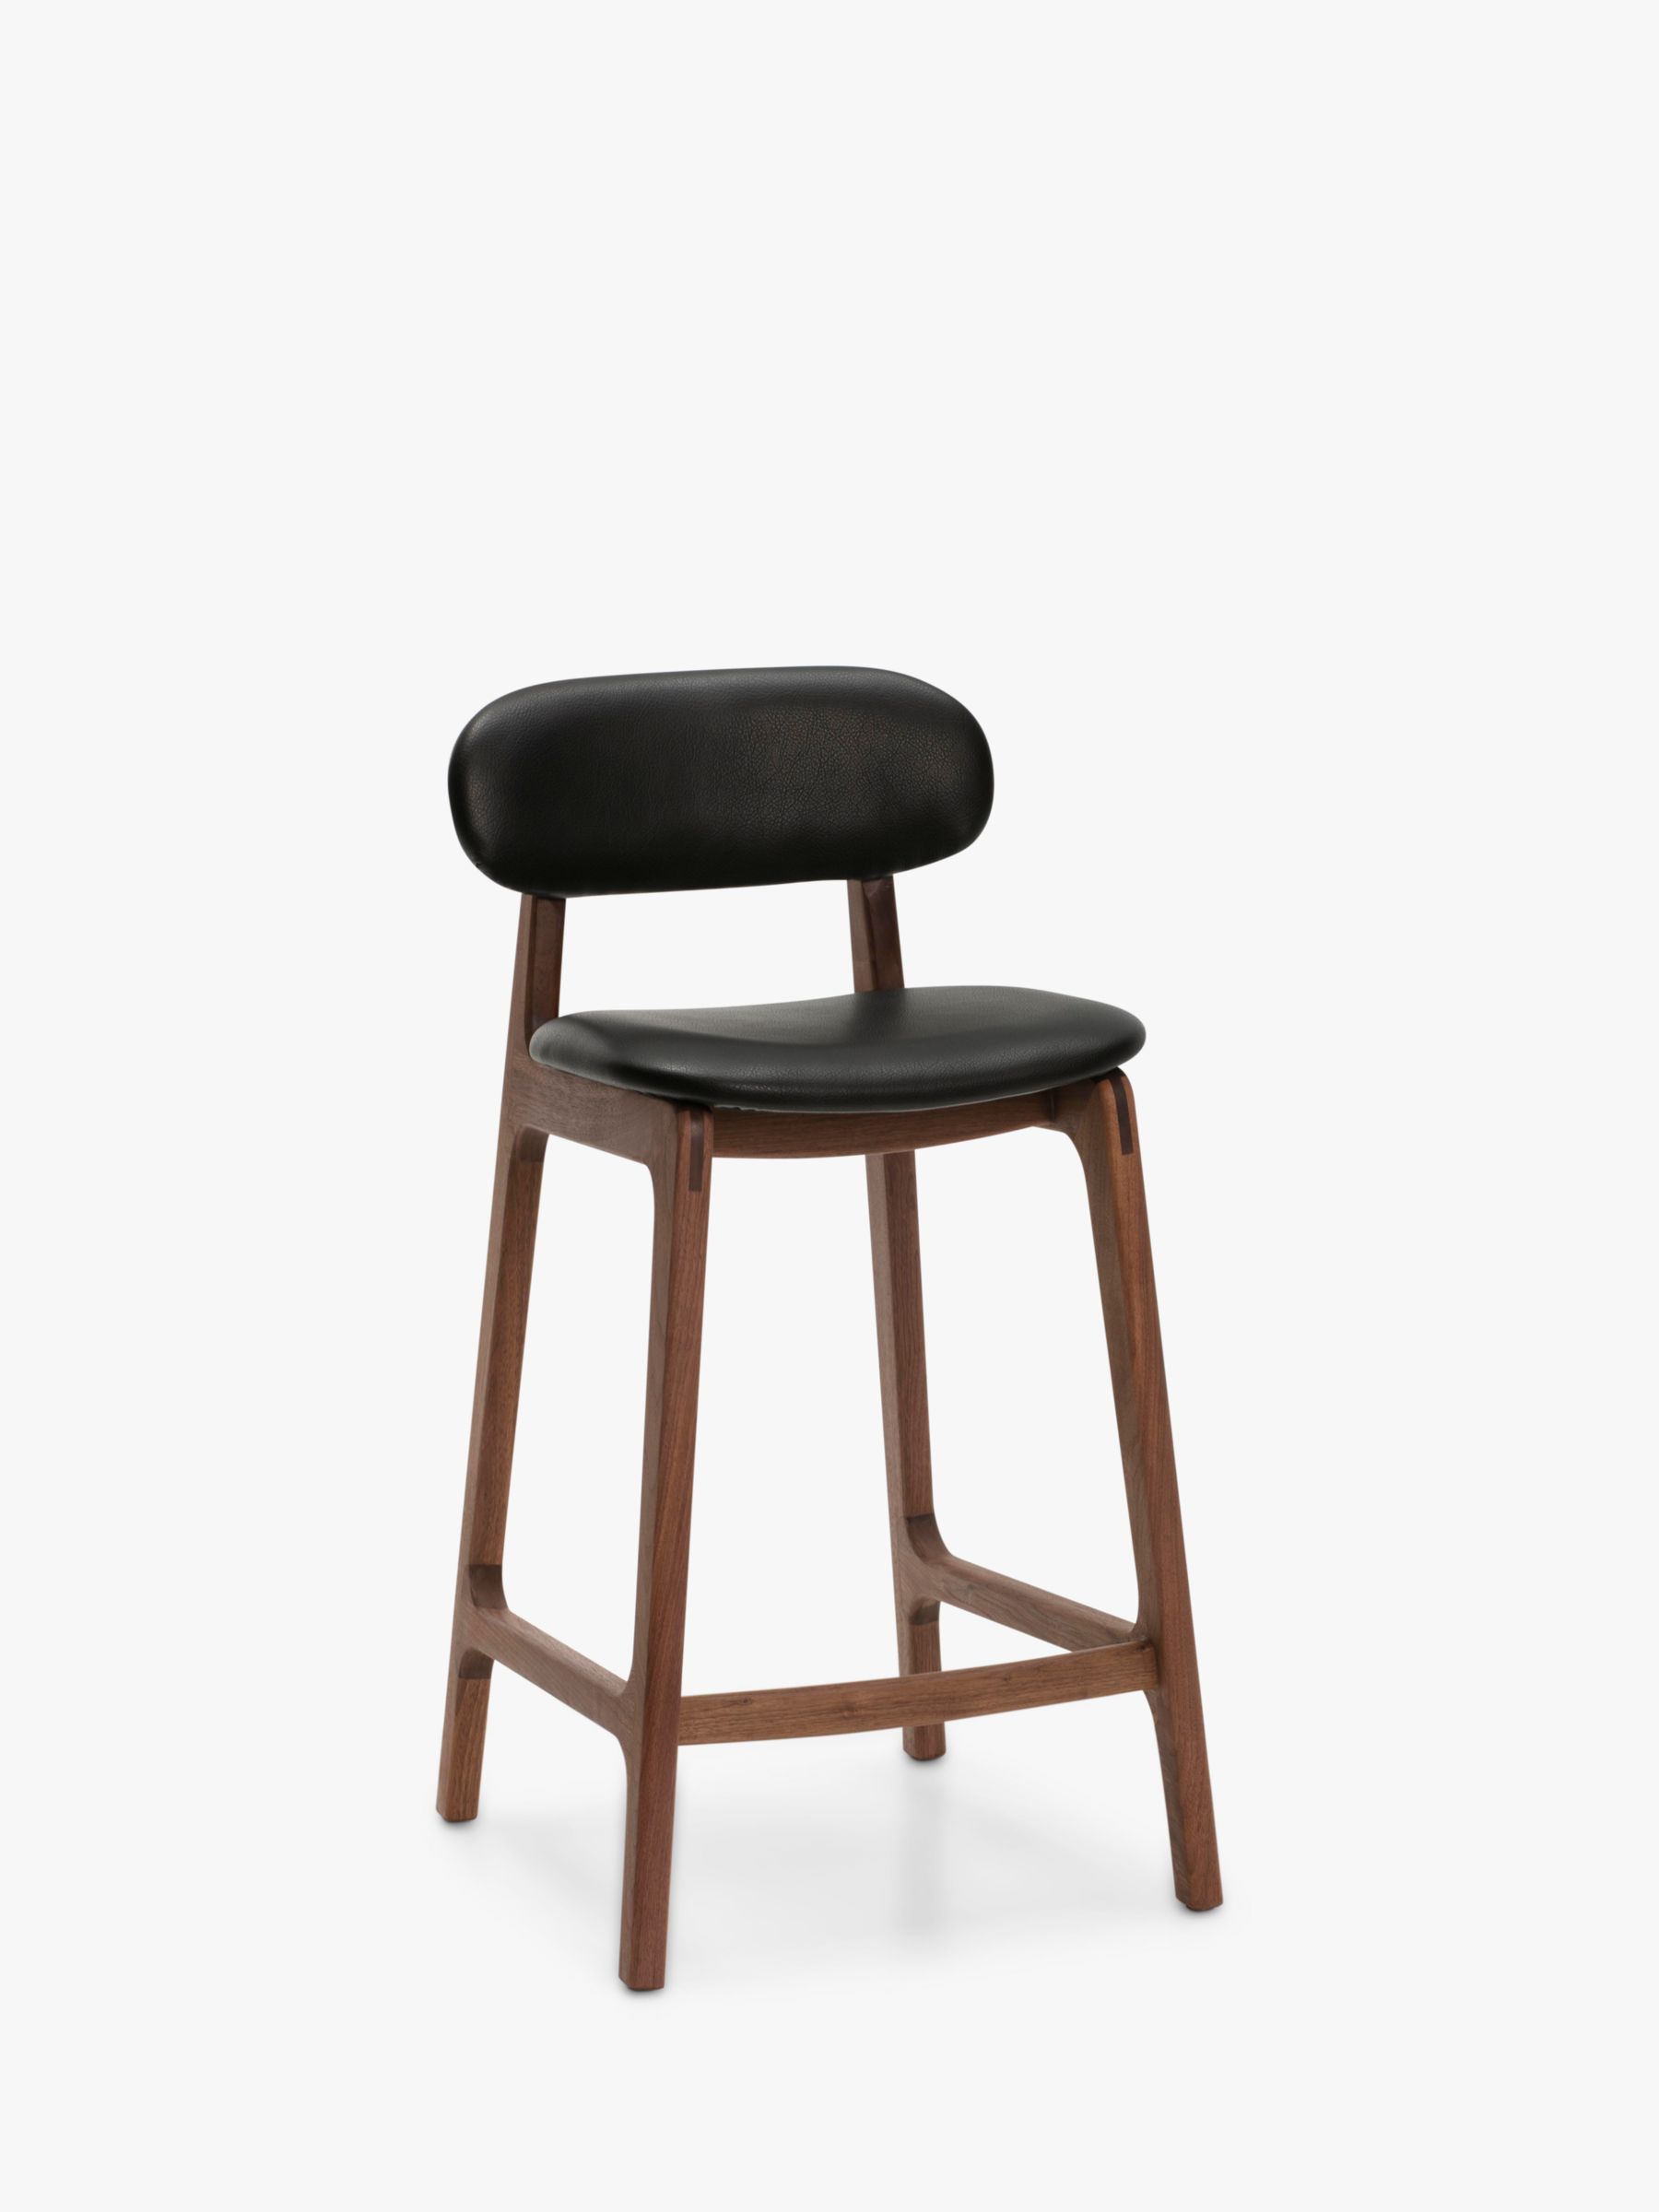 Bar Chairs Stools John Lewis Partners, Light Wood Bar Stools With Backs